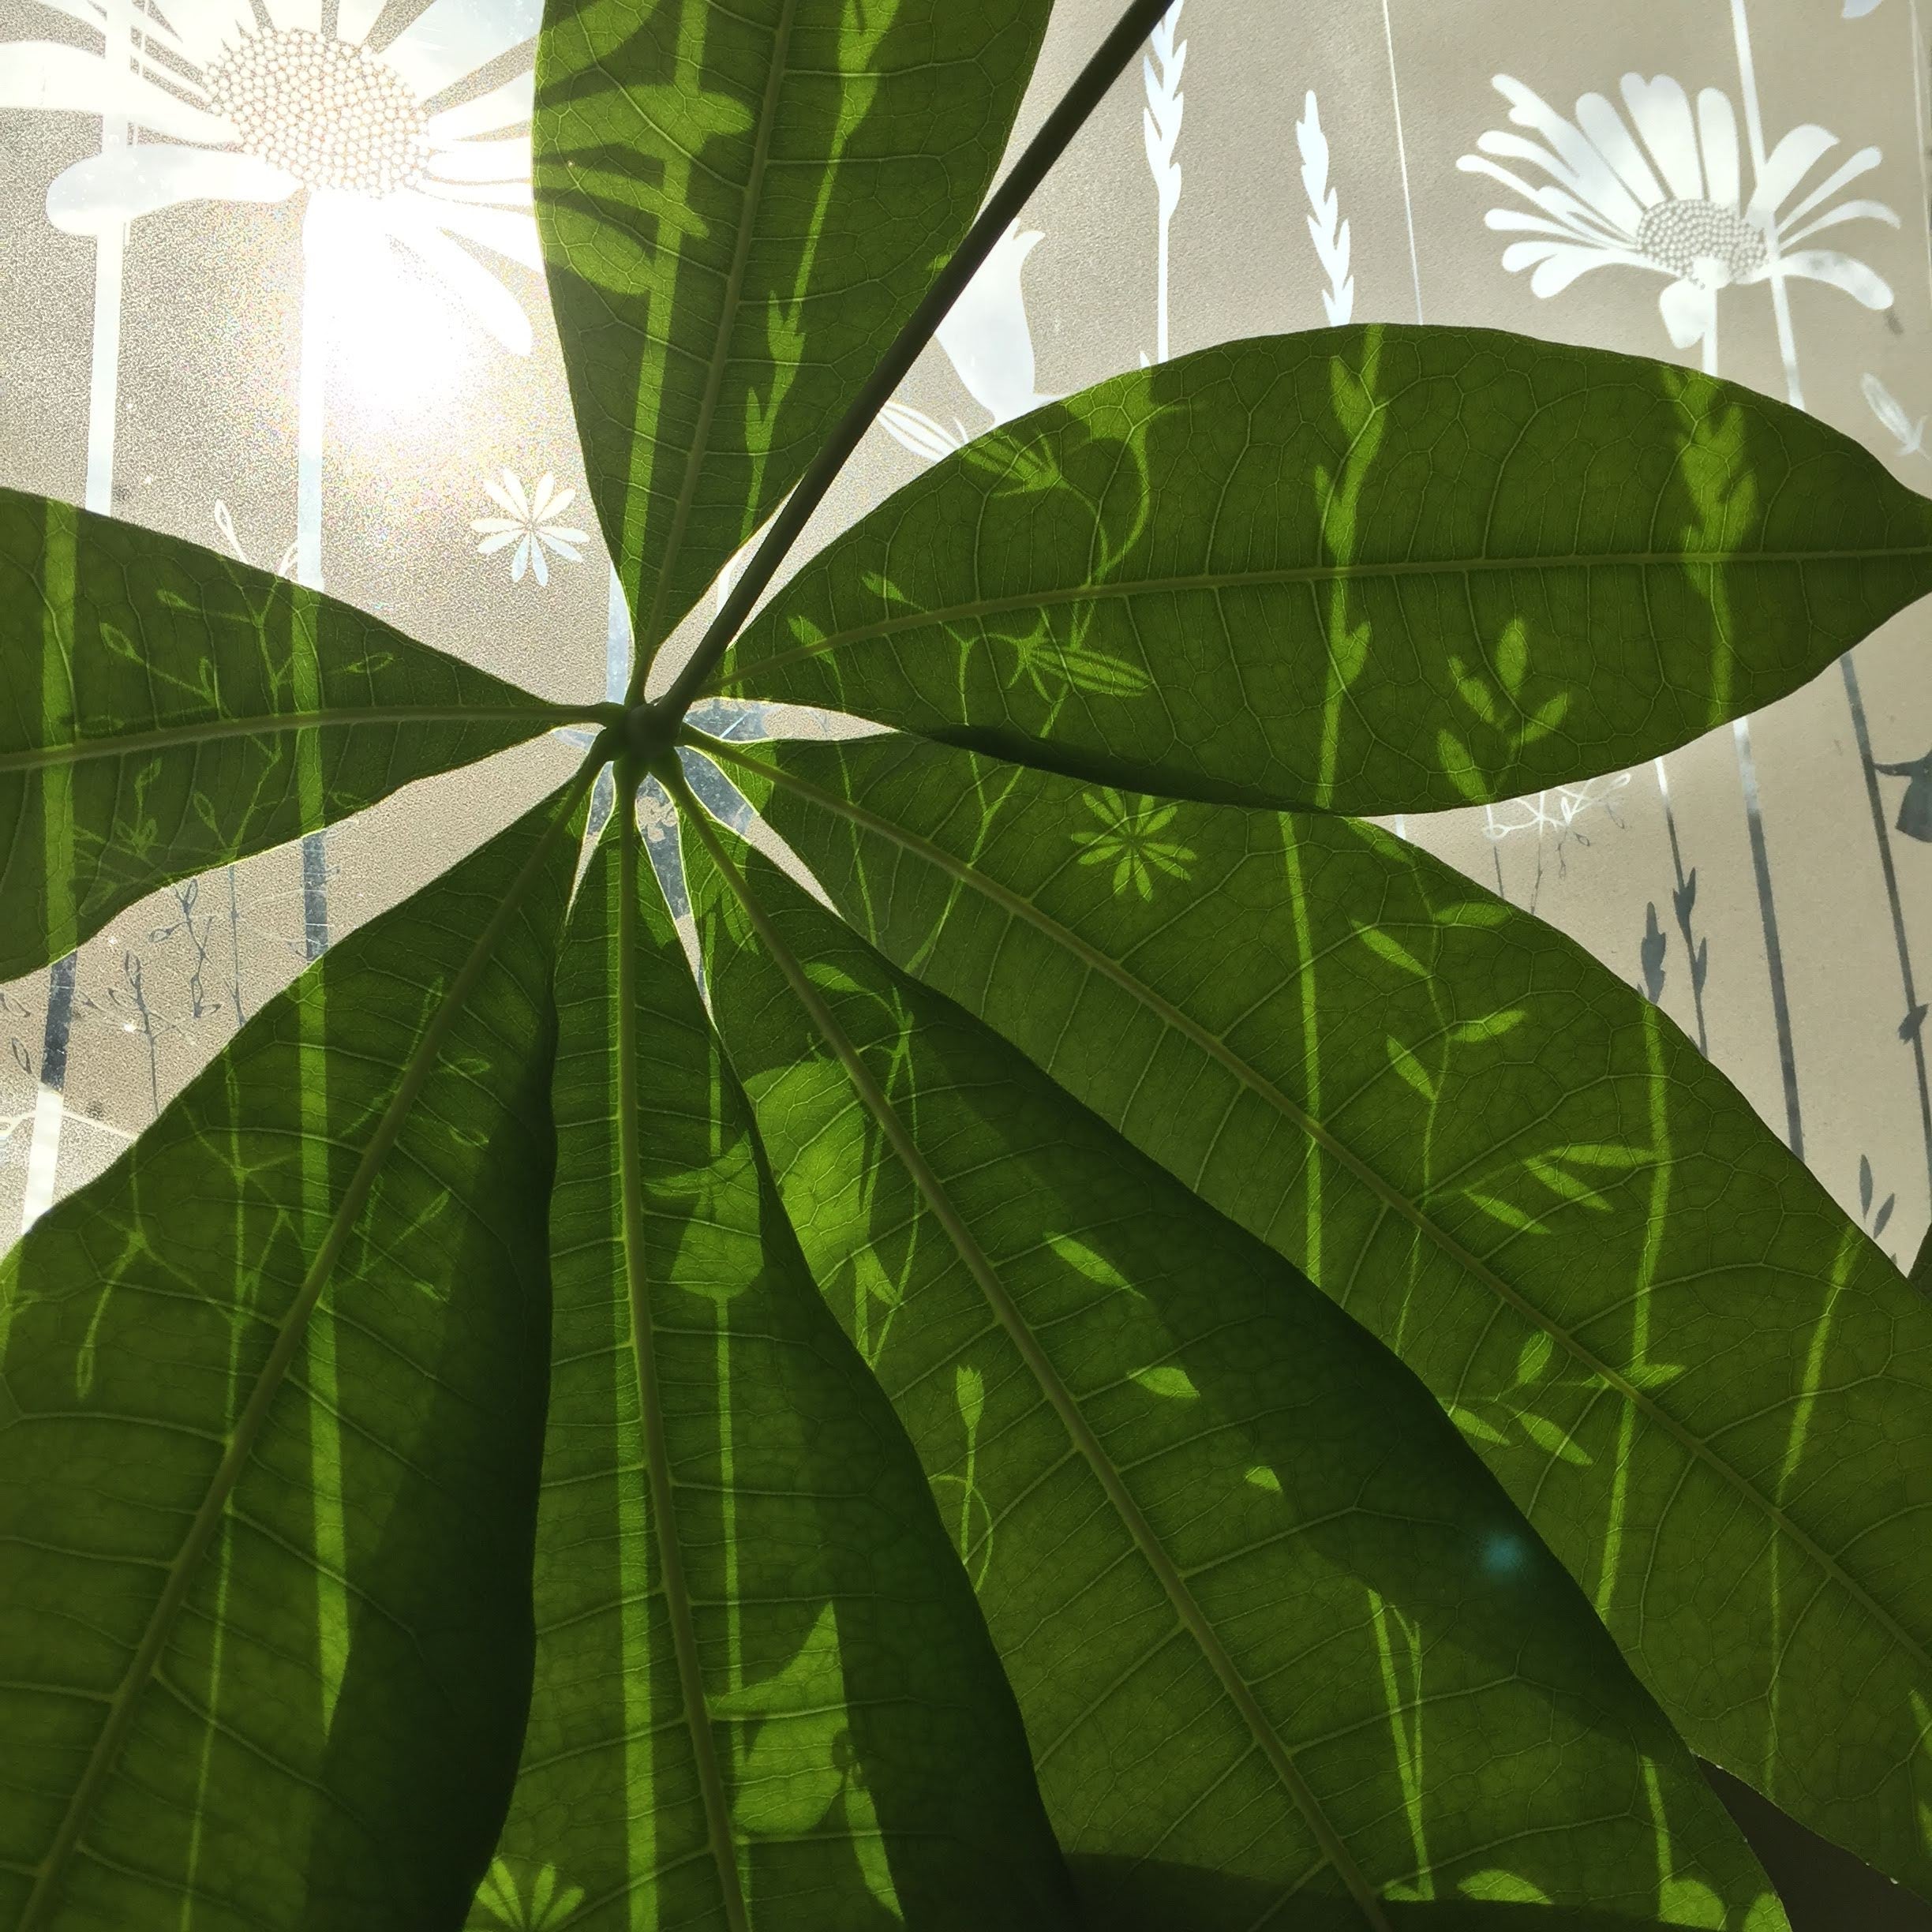 Hannah Nunn daisy meadow window film creating silhouettes on the leaves of a houseplant